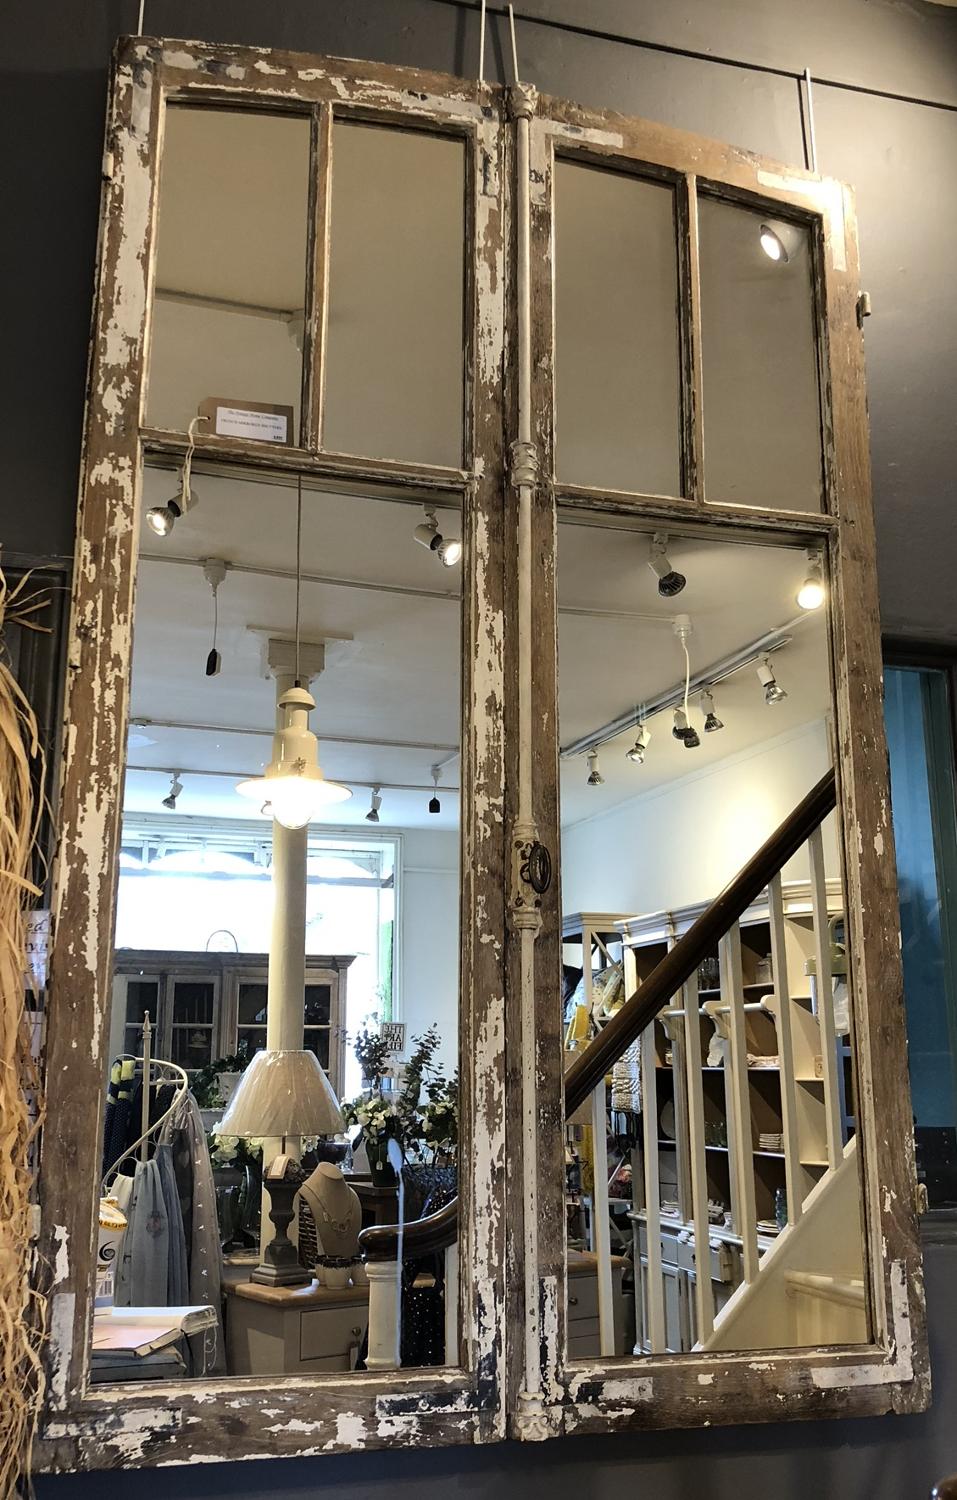 Mirrored French doors